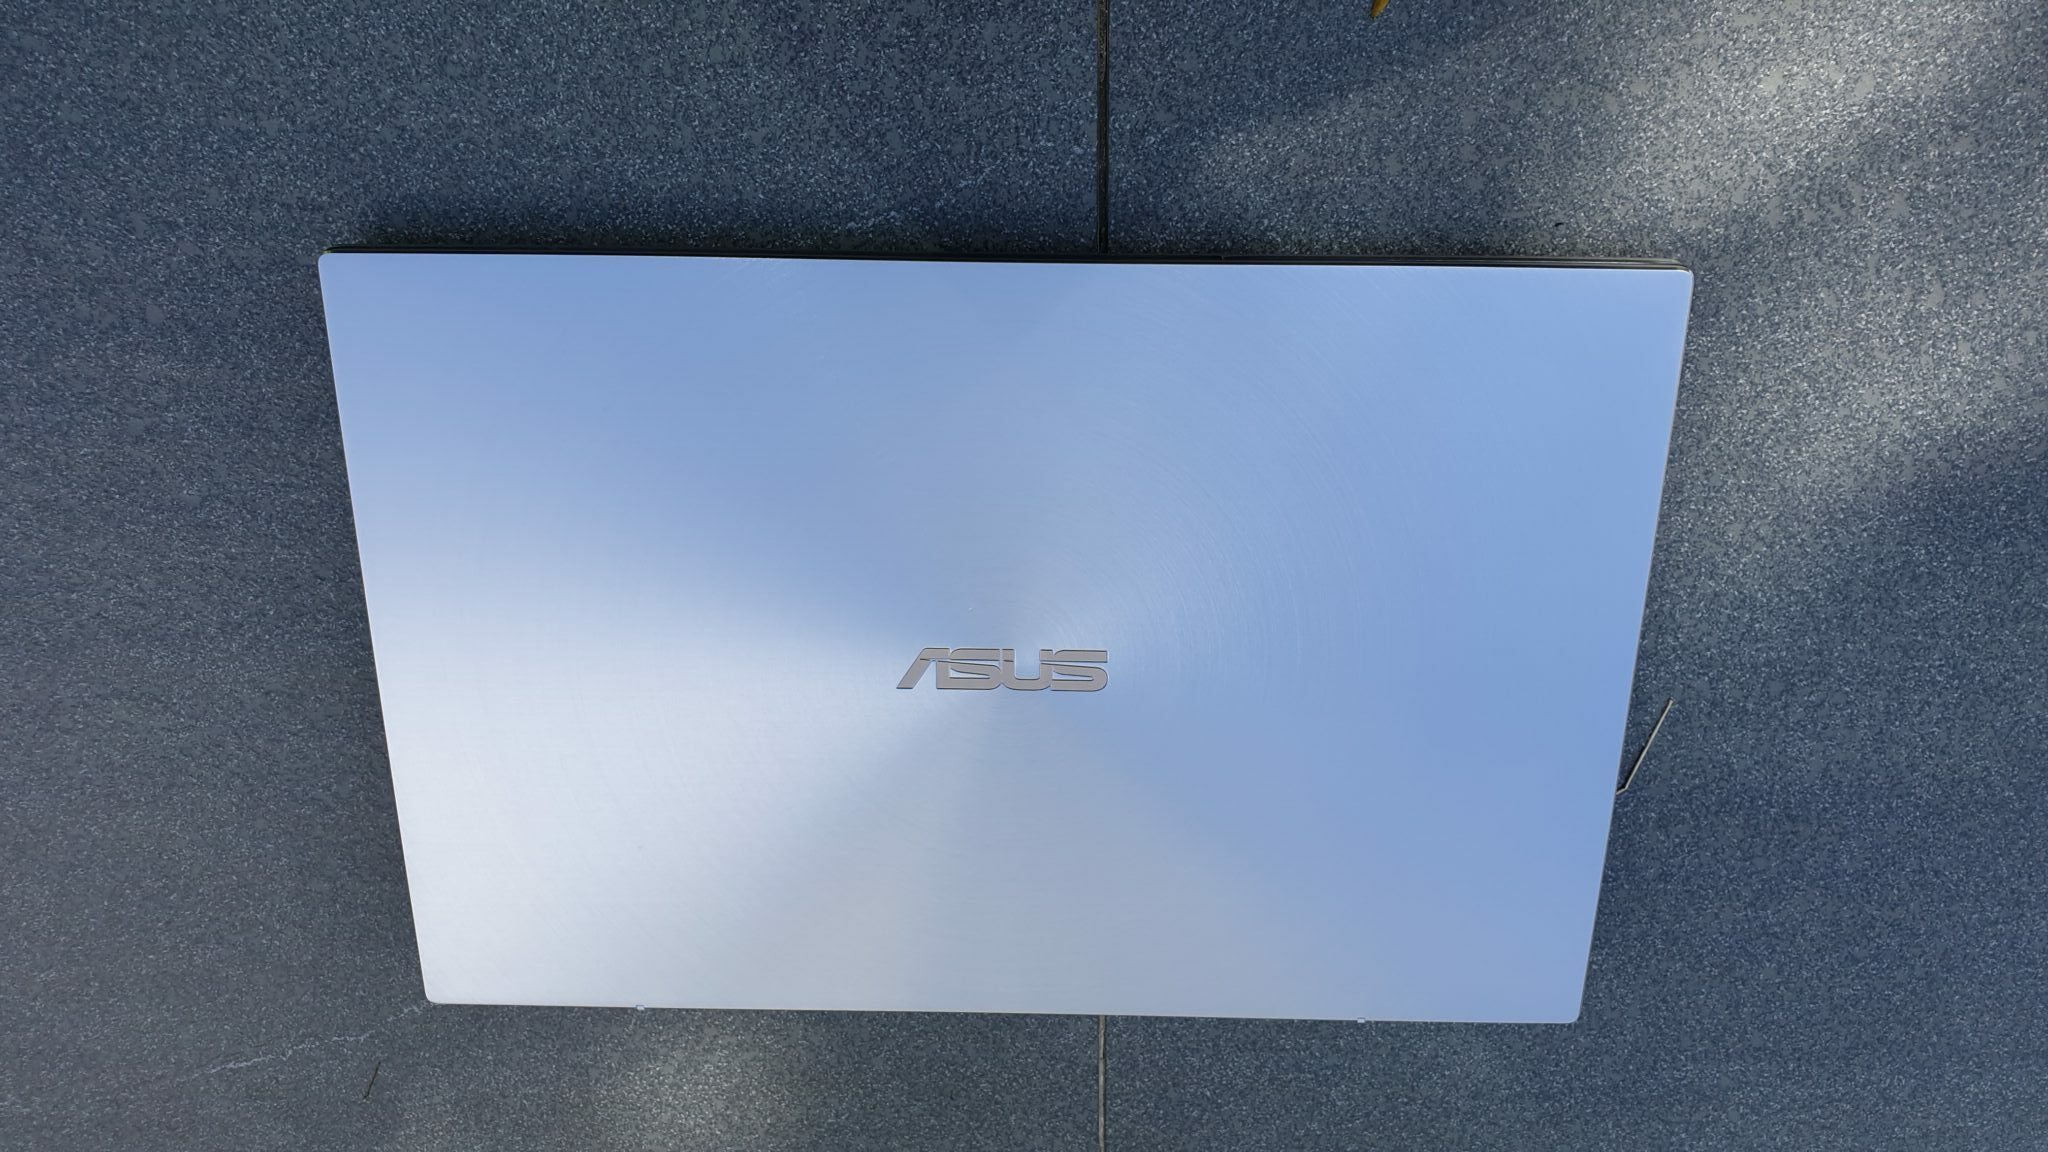 First Look at the Asus ZenBook 14 UM431 notebook 2